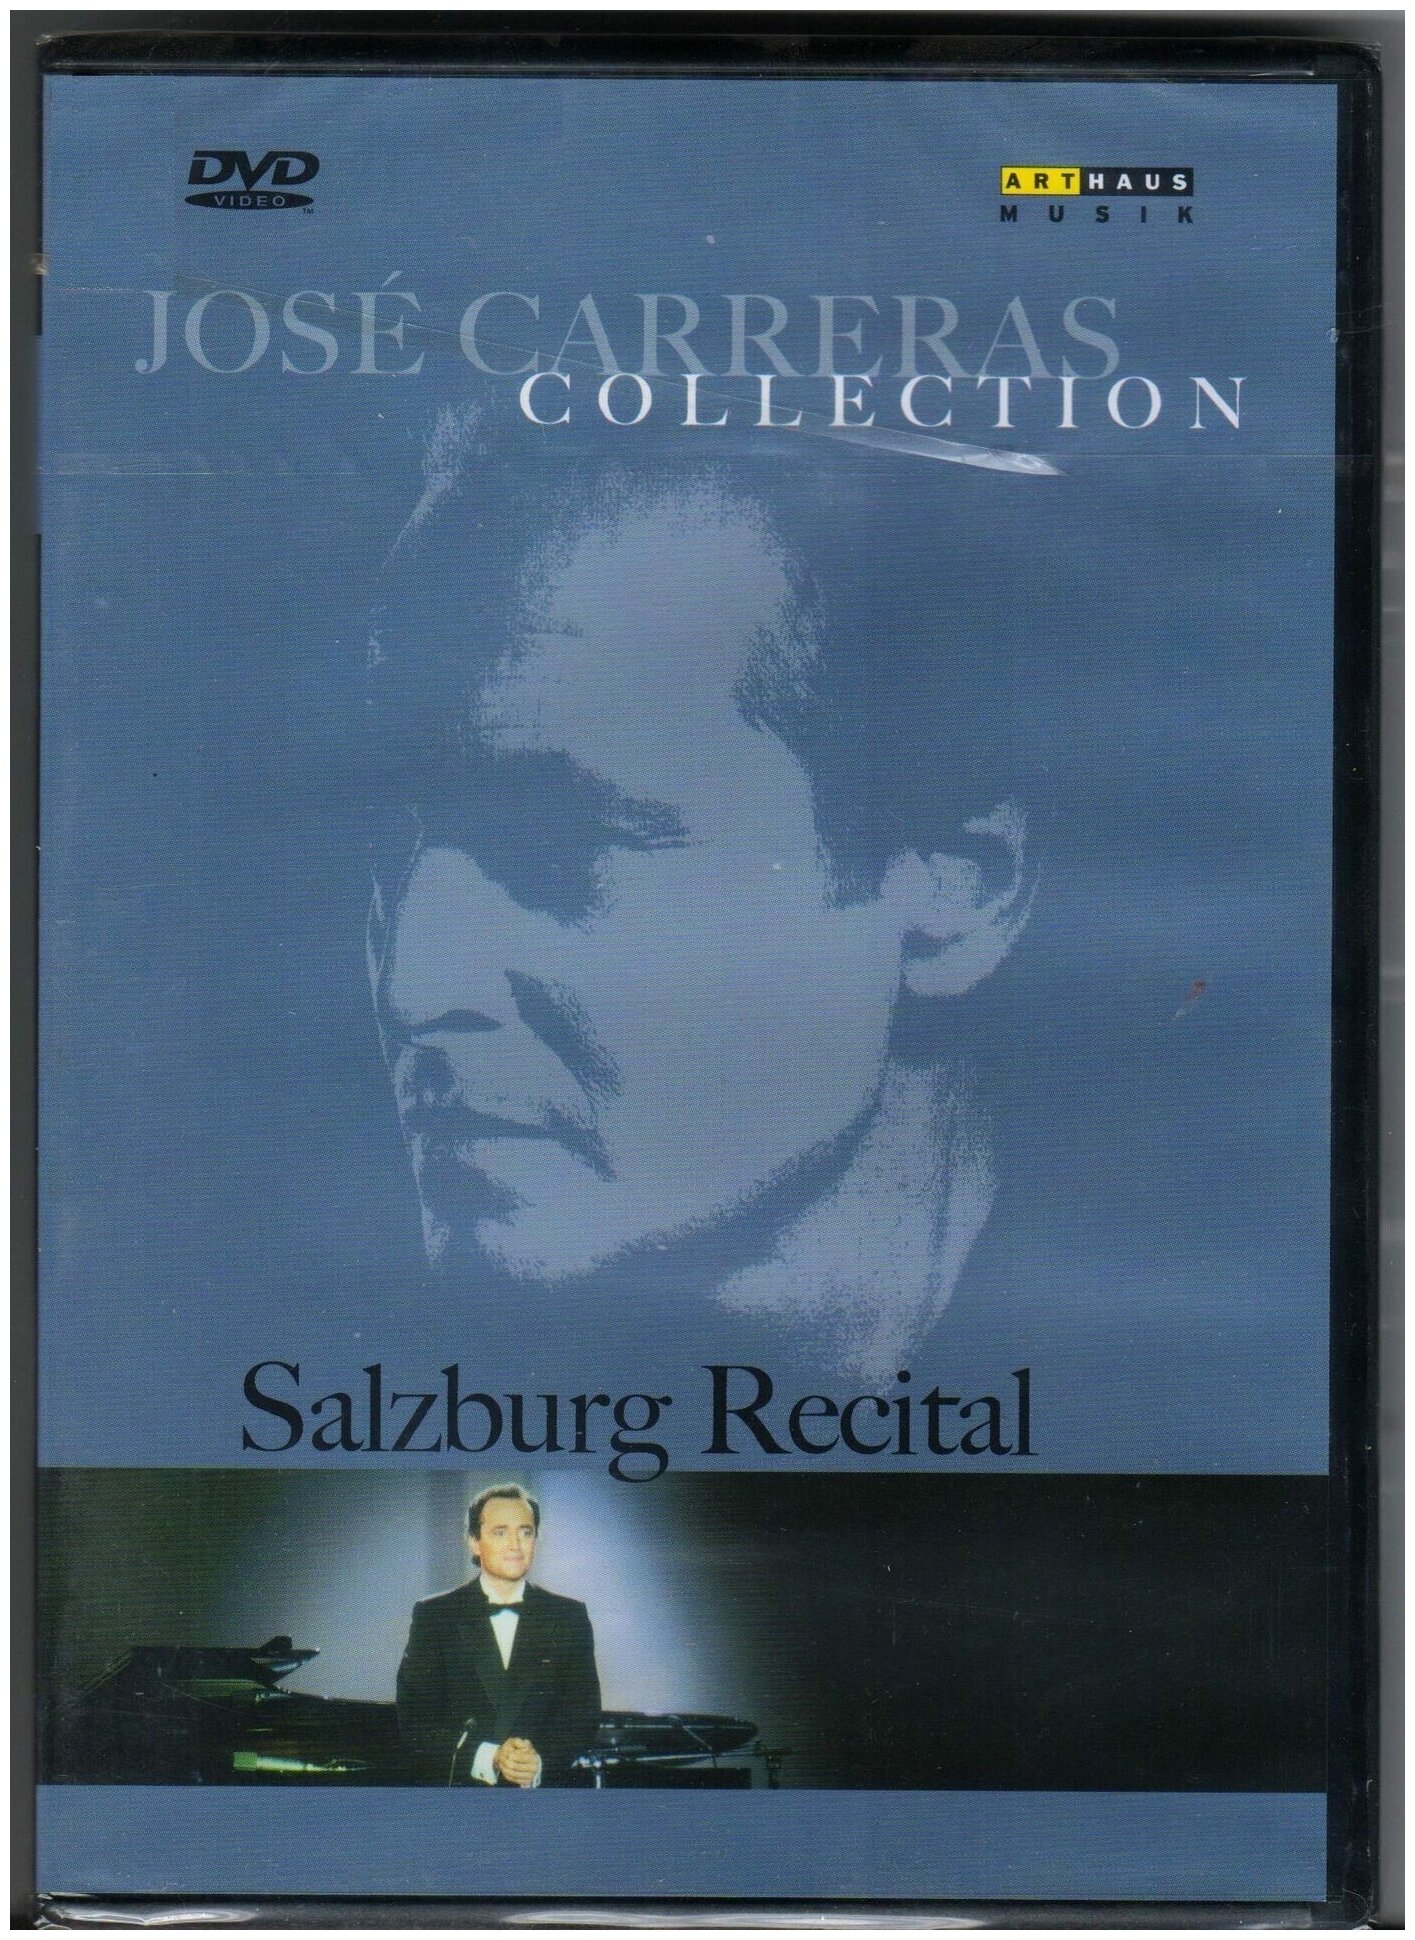 Jose Carreras Collection - Salzburg Recital 1989- Arthaus DVD import (ДВД Видео 1шт) Опера вокал